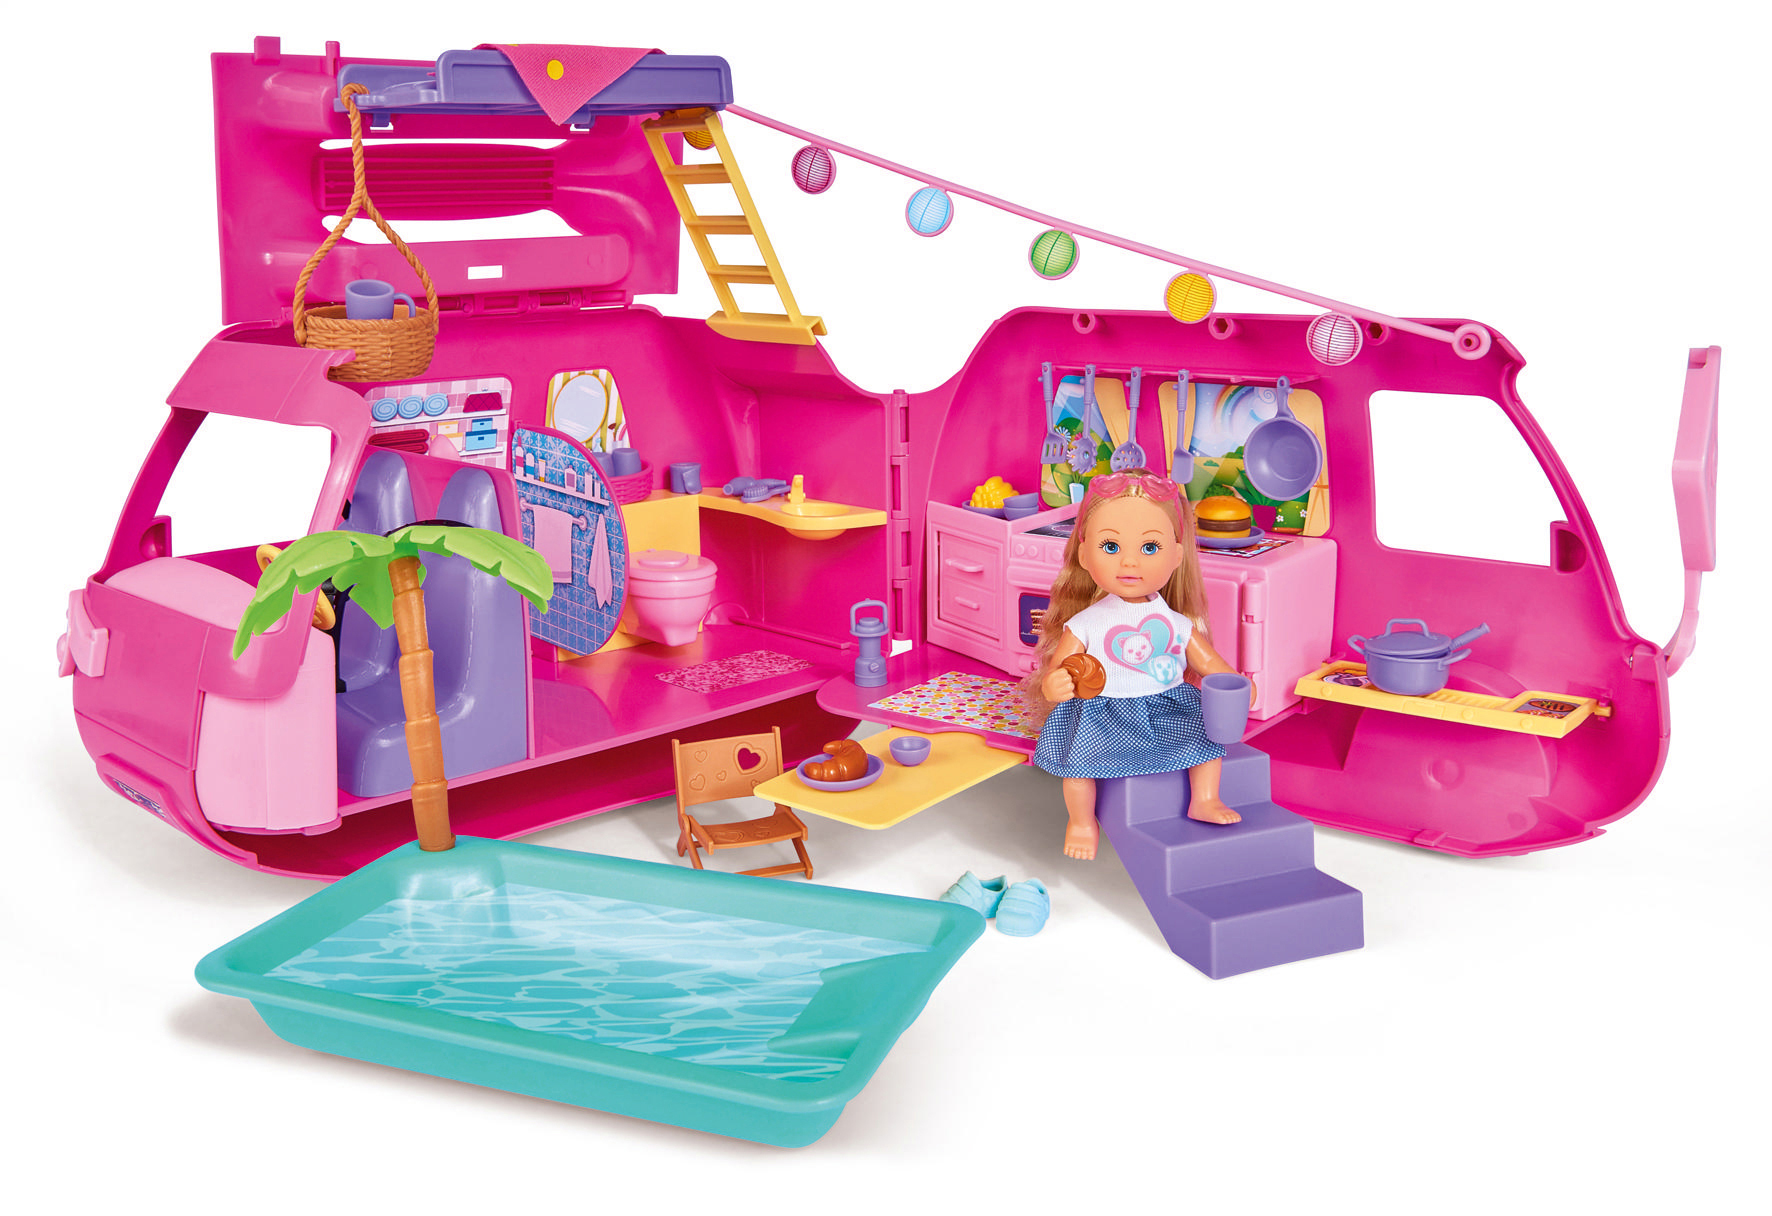 SIMBA TOYS EL Mehrfarbig Spielzeugset Ferienspaß Wohnmobil